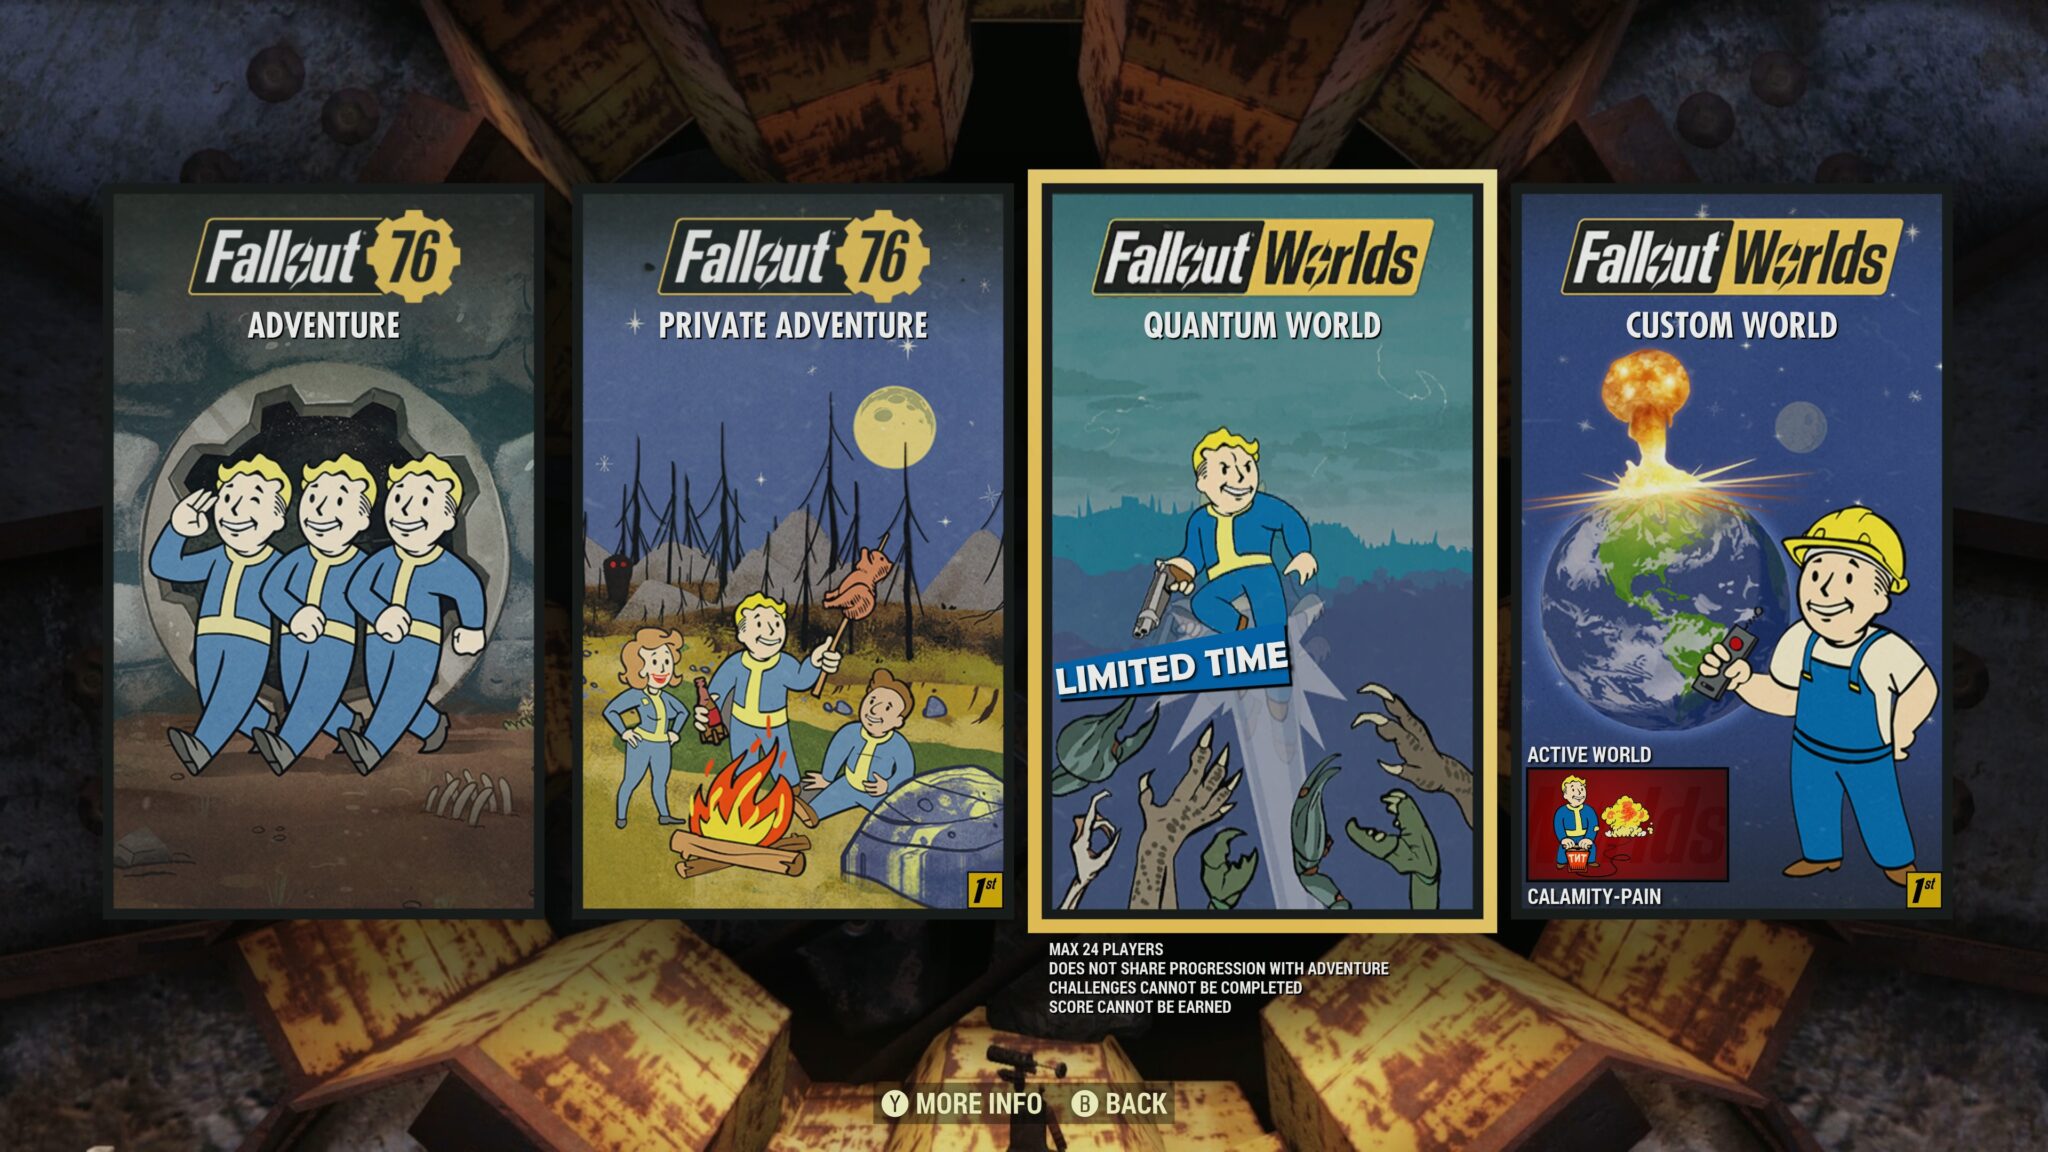 Je kunt wisselen tussen de verschillende spelmodi in Fallout 76.